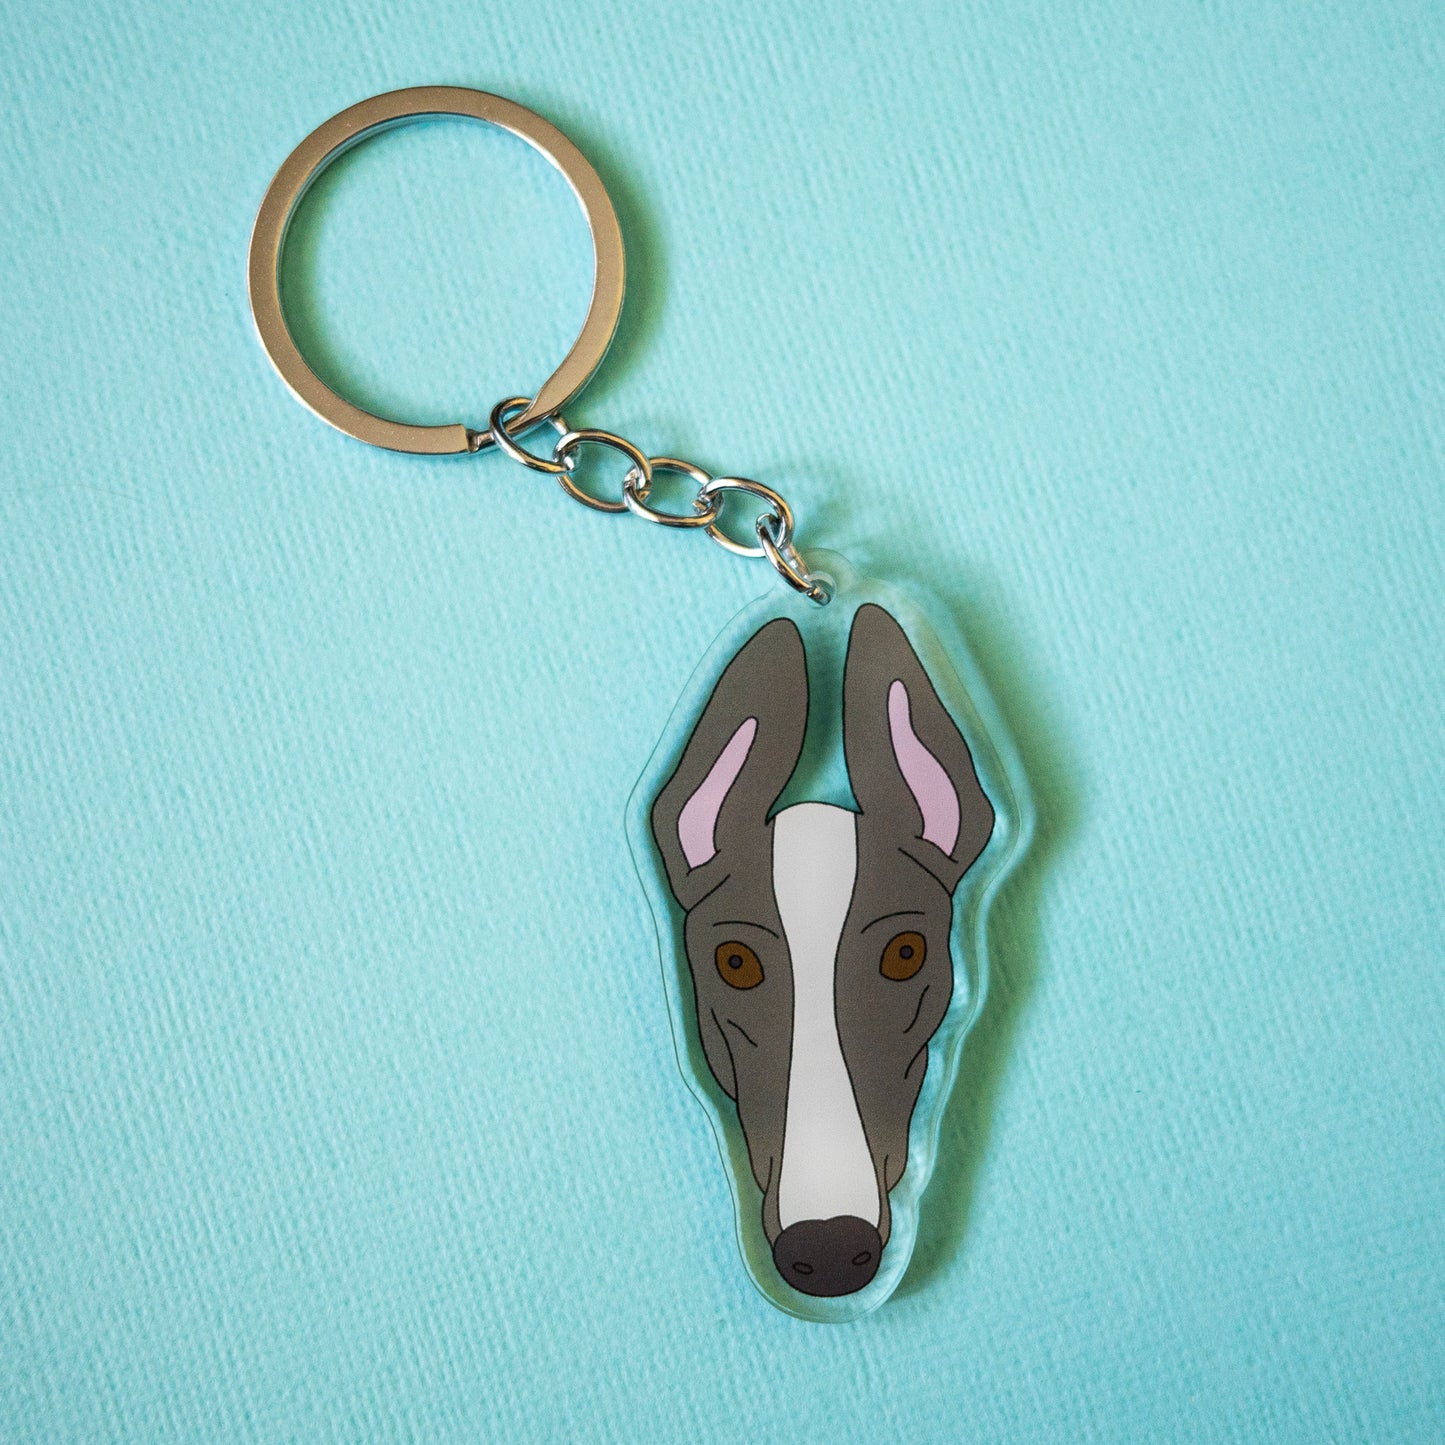 Greyhound Keychain - Grey & White